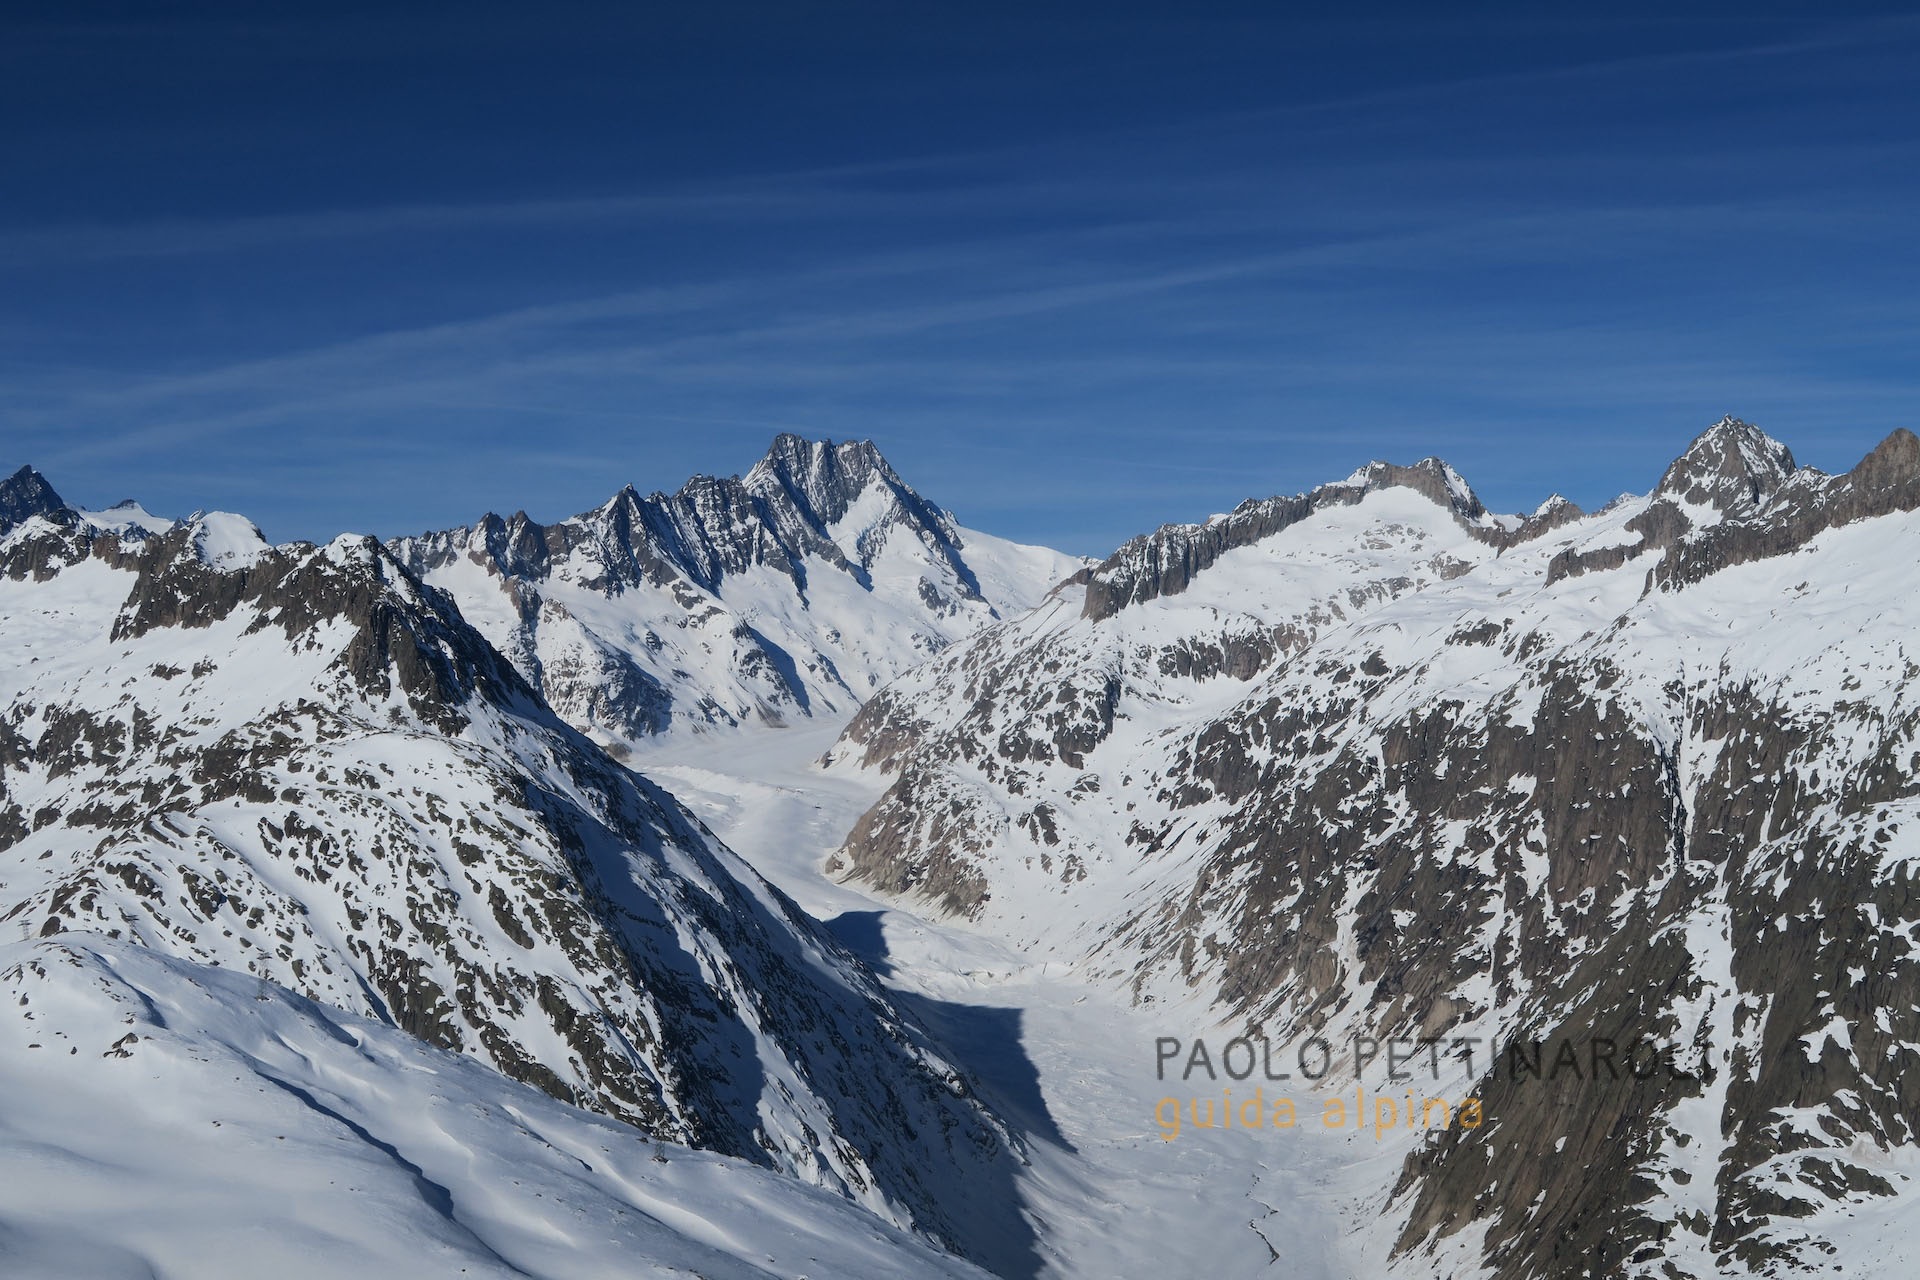 IMG_2881-panorami_paolo pettinaroli guida alpina